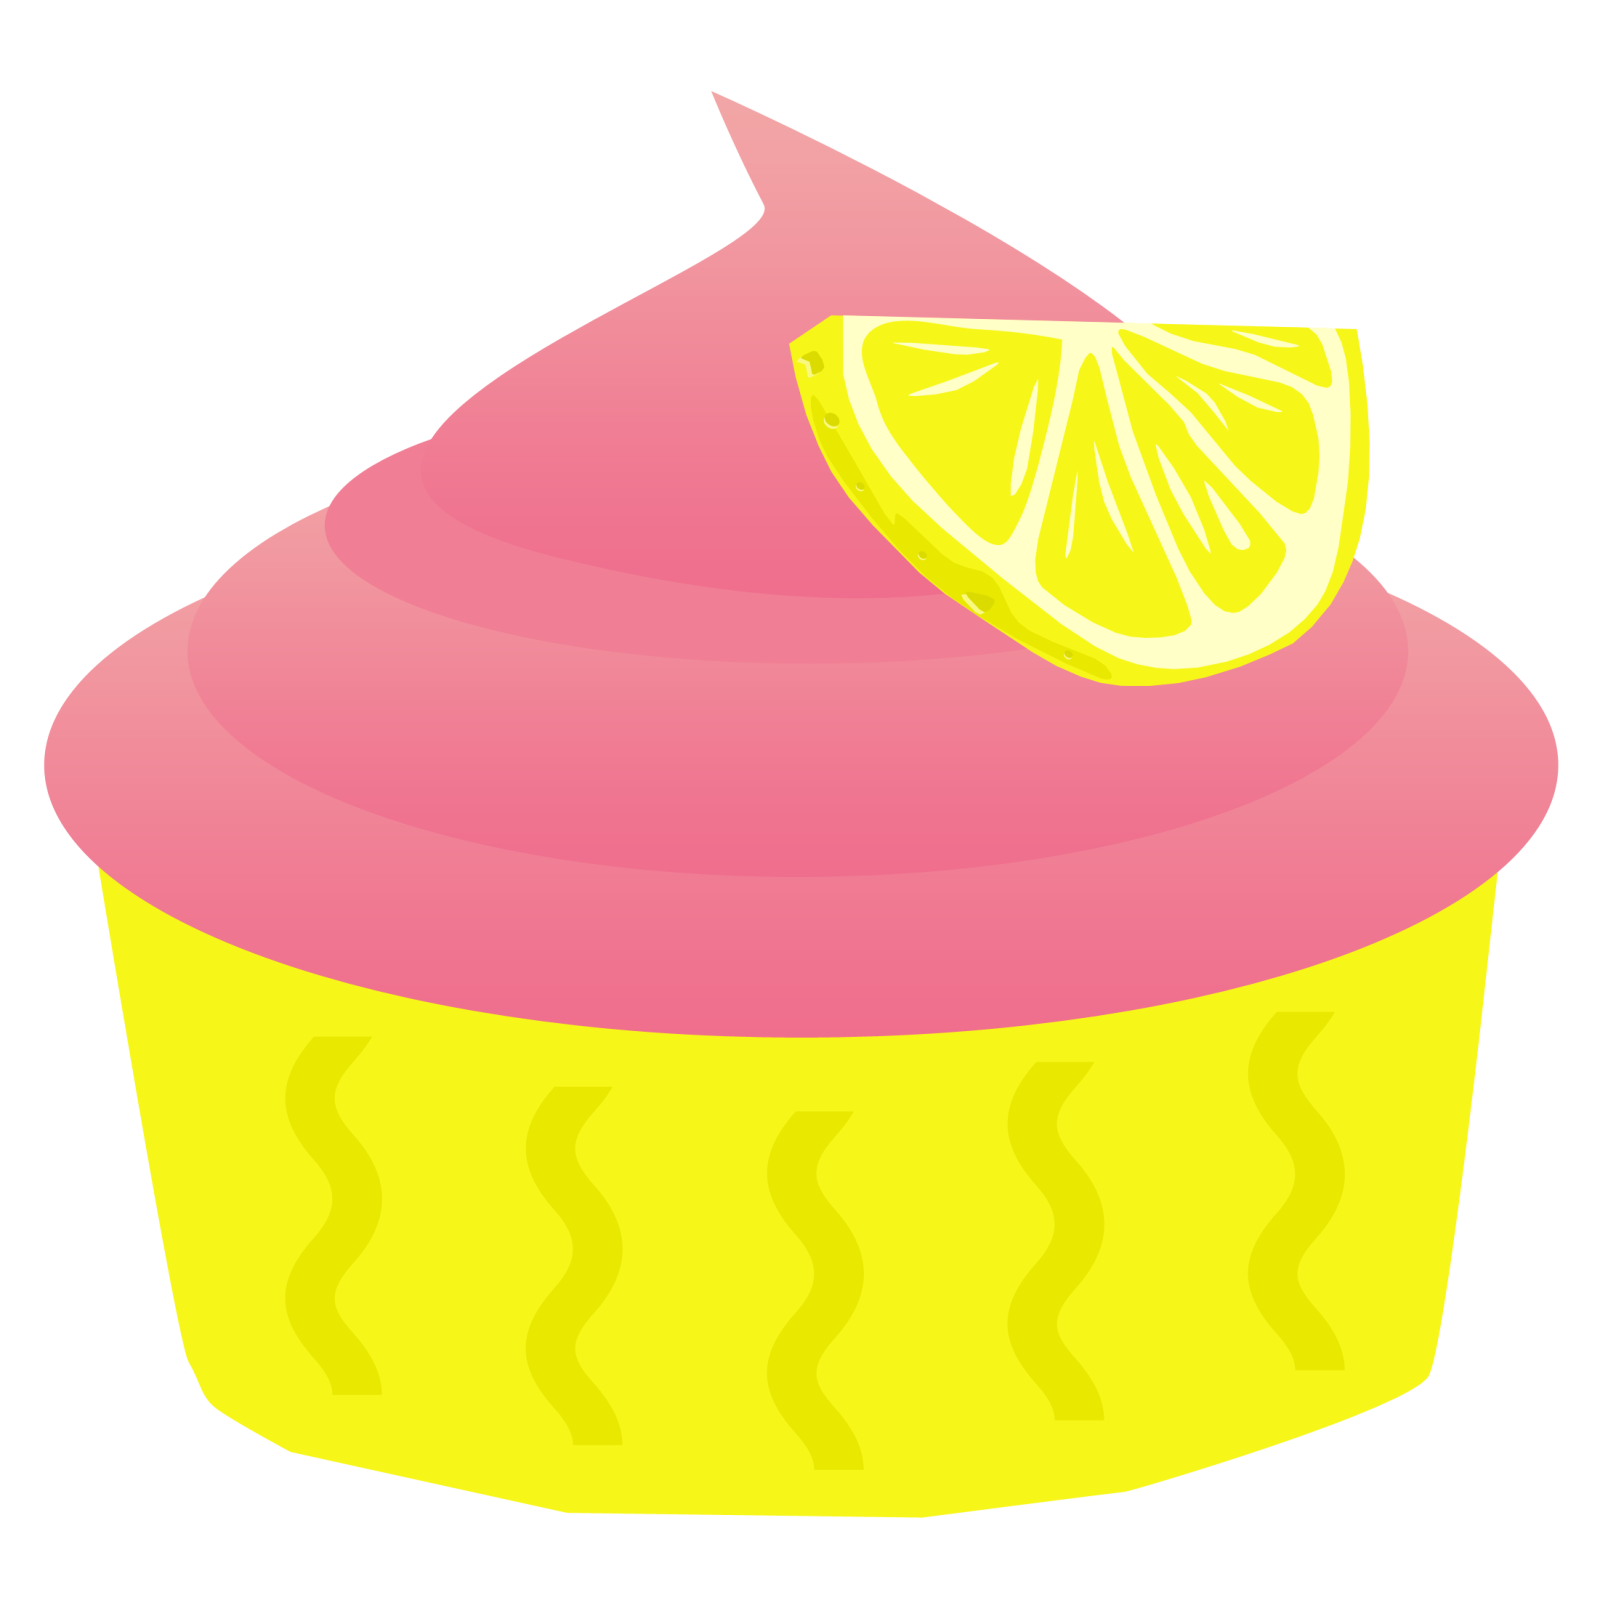 Lushous cupcakes network pink. Lemonade clipart watermelon lemonade